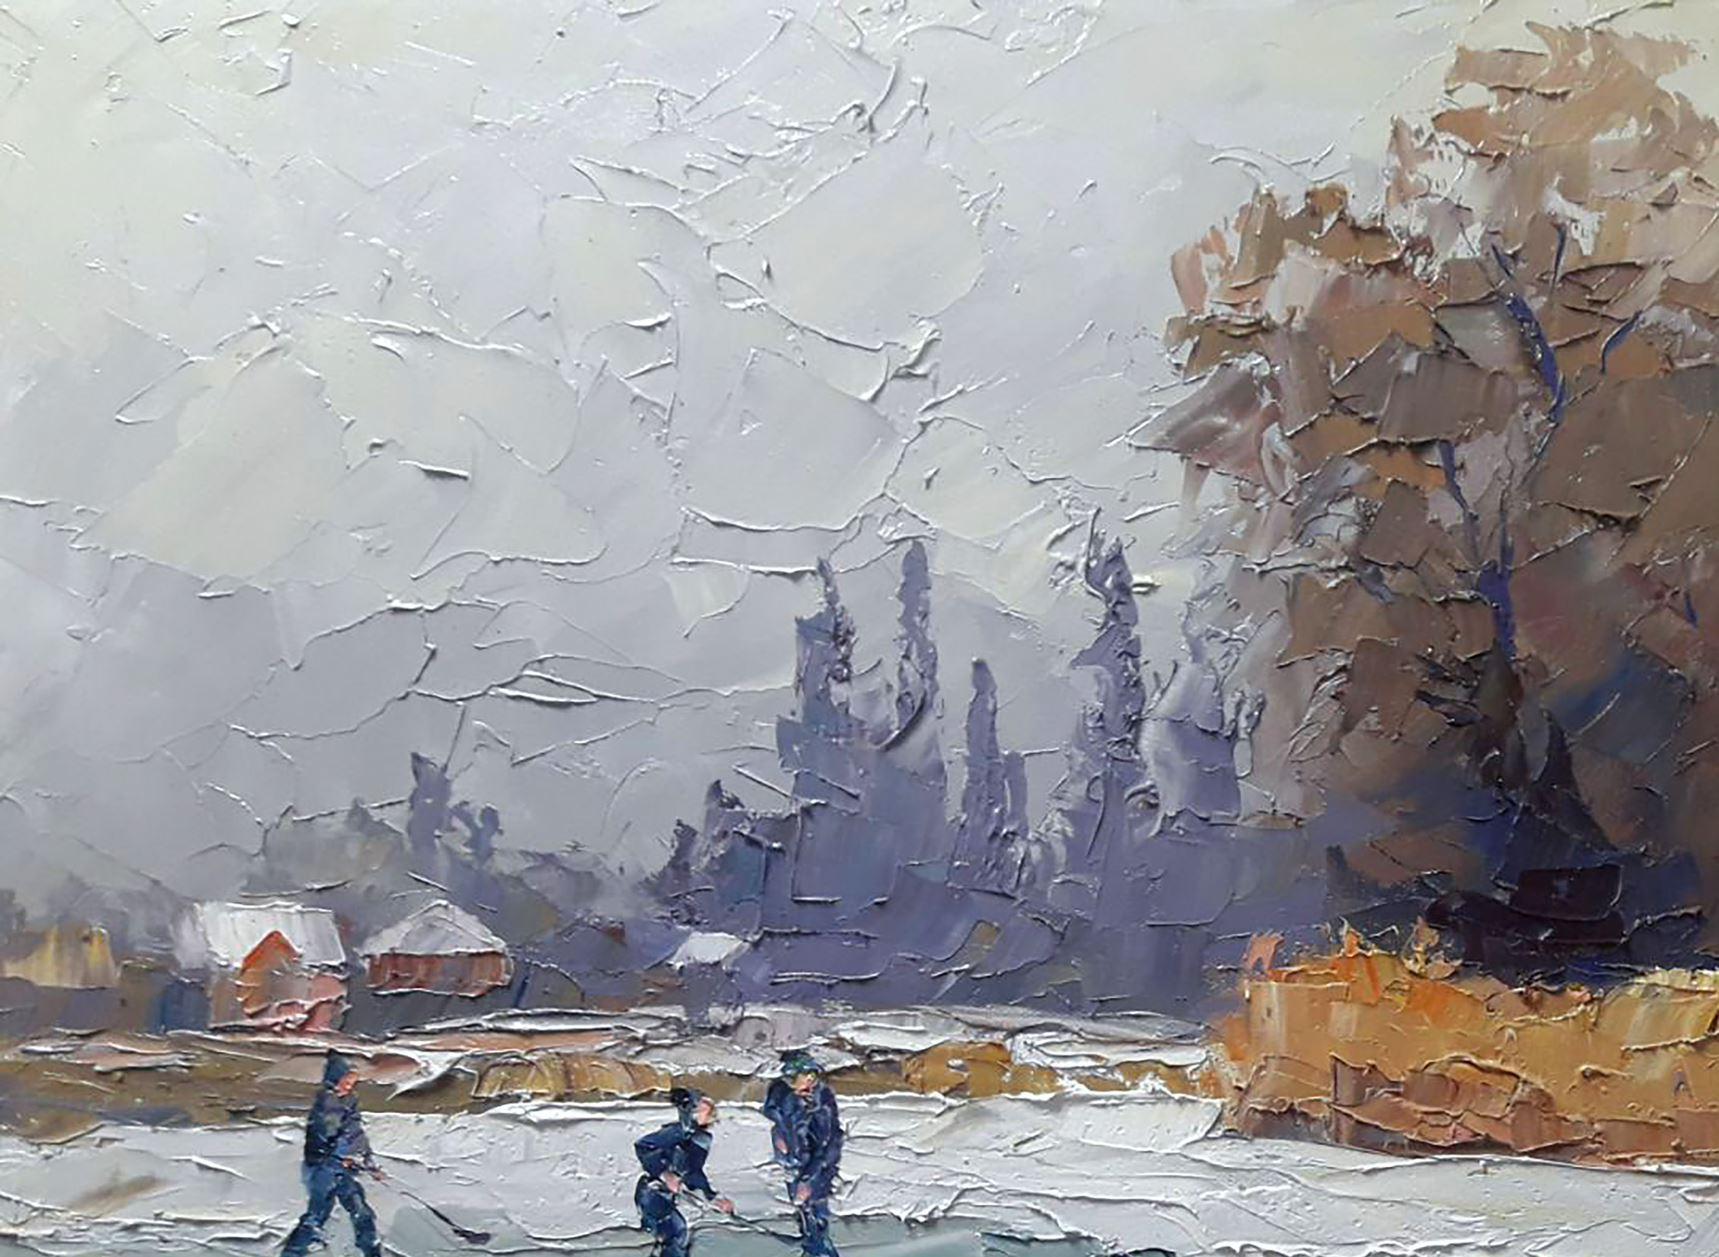 Artist: Boris Serdyuk 
Work: Original oil painting, handmade artwork, one of a kind 
Medium: Oil on Canvas
Style: Impressionism
Year: 2020
Title: Skating rink
Size: 19.5